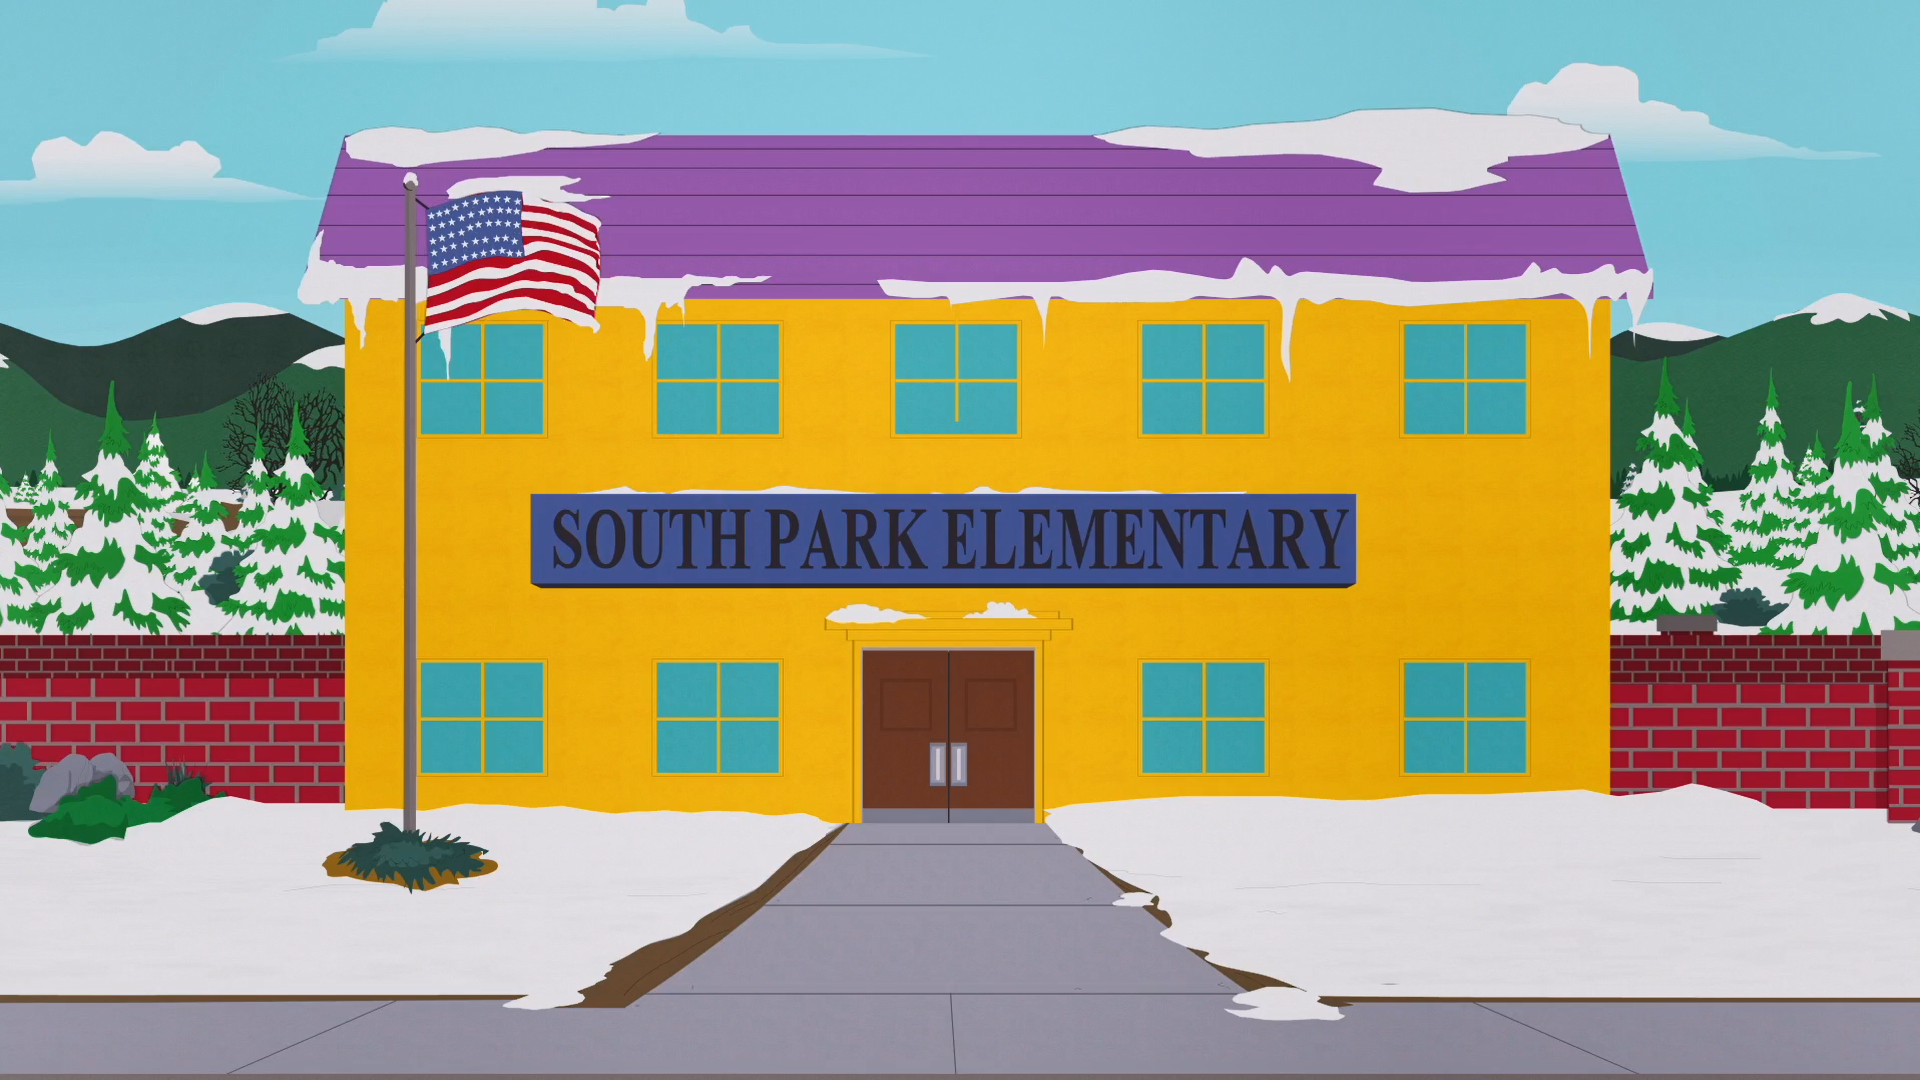 South Park Elementary